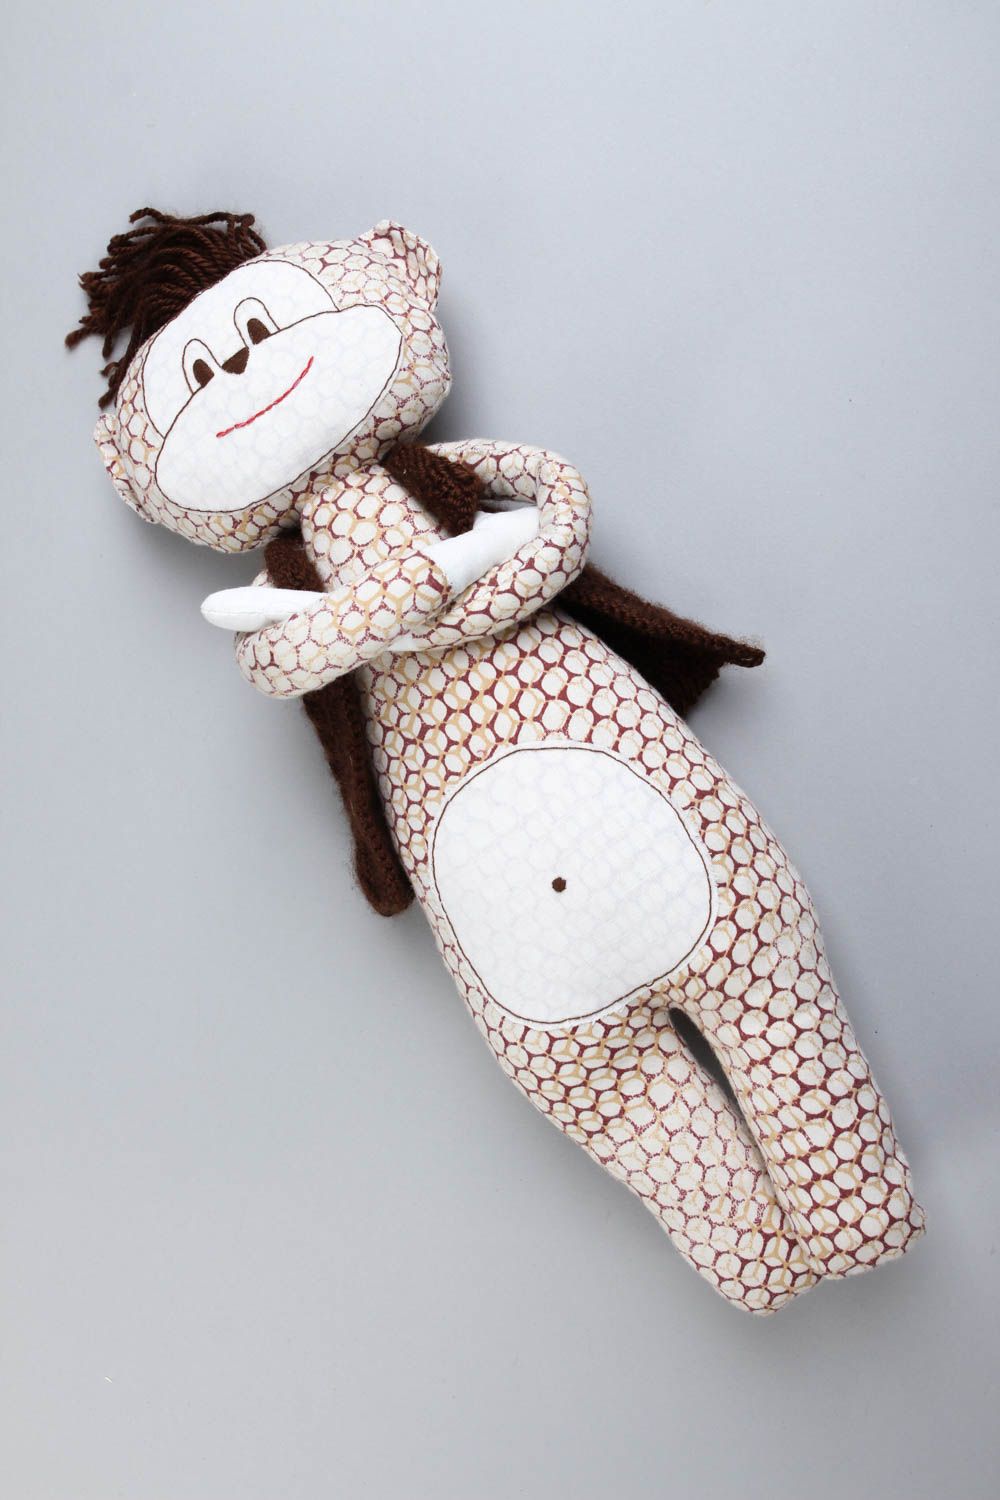 Stylish handmade toy fabric soft toy stuffed toy for kids nursery design photo 1